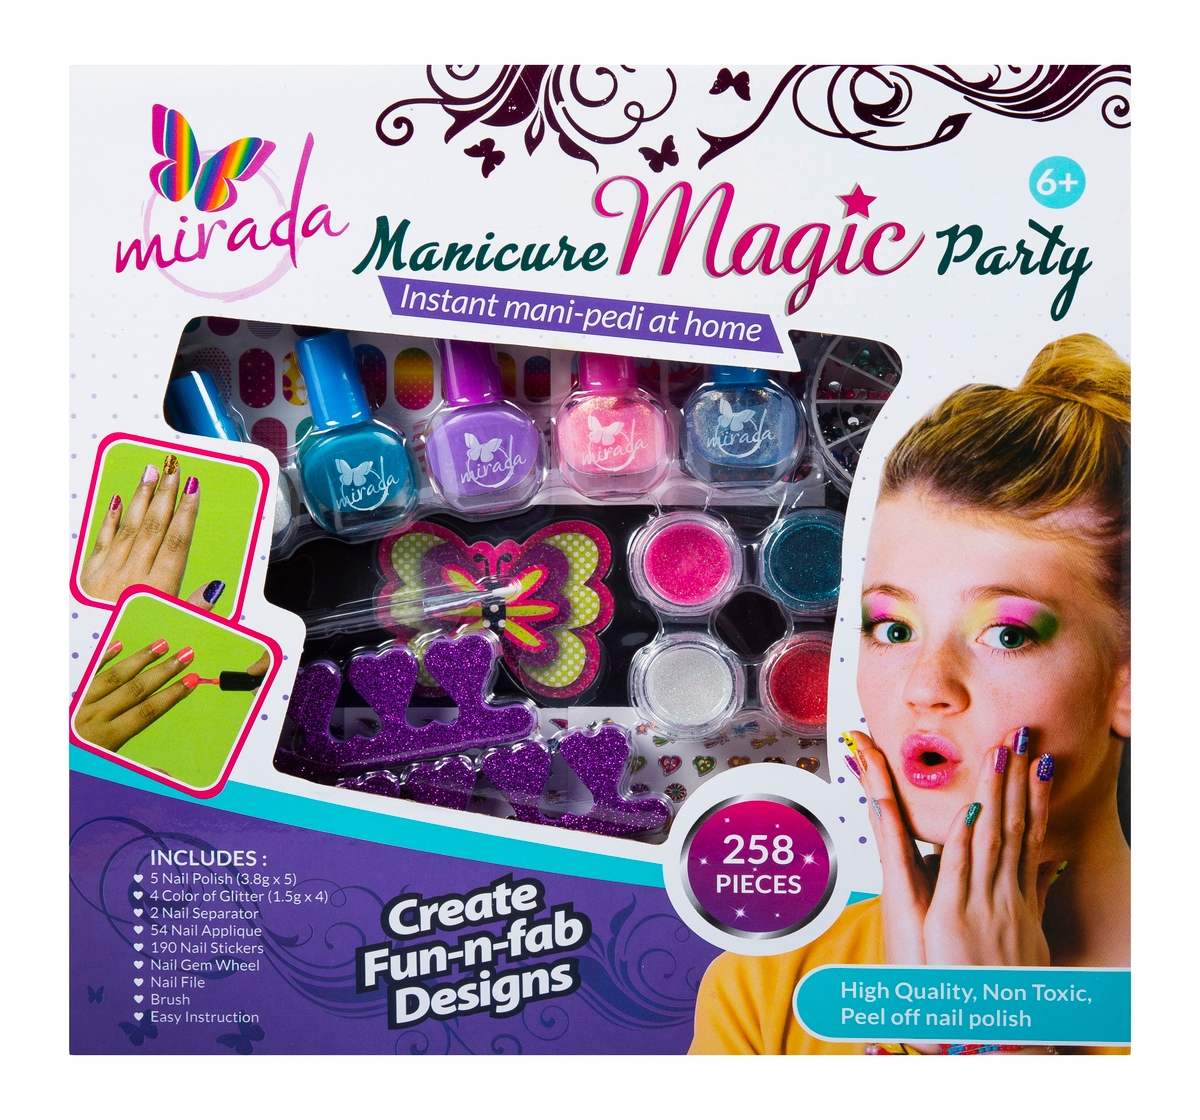 Mirada | Mirada Manicure Magic Party DIY Art & Craft Kits for Kids age 5Y+ 